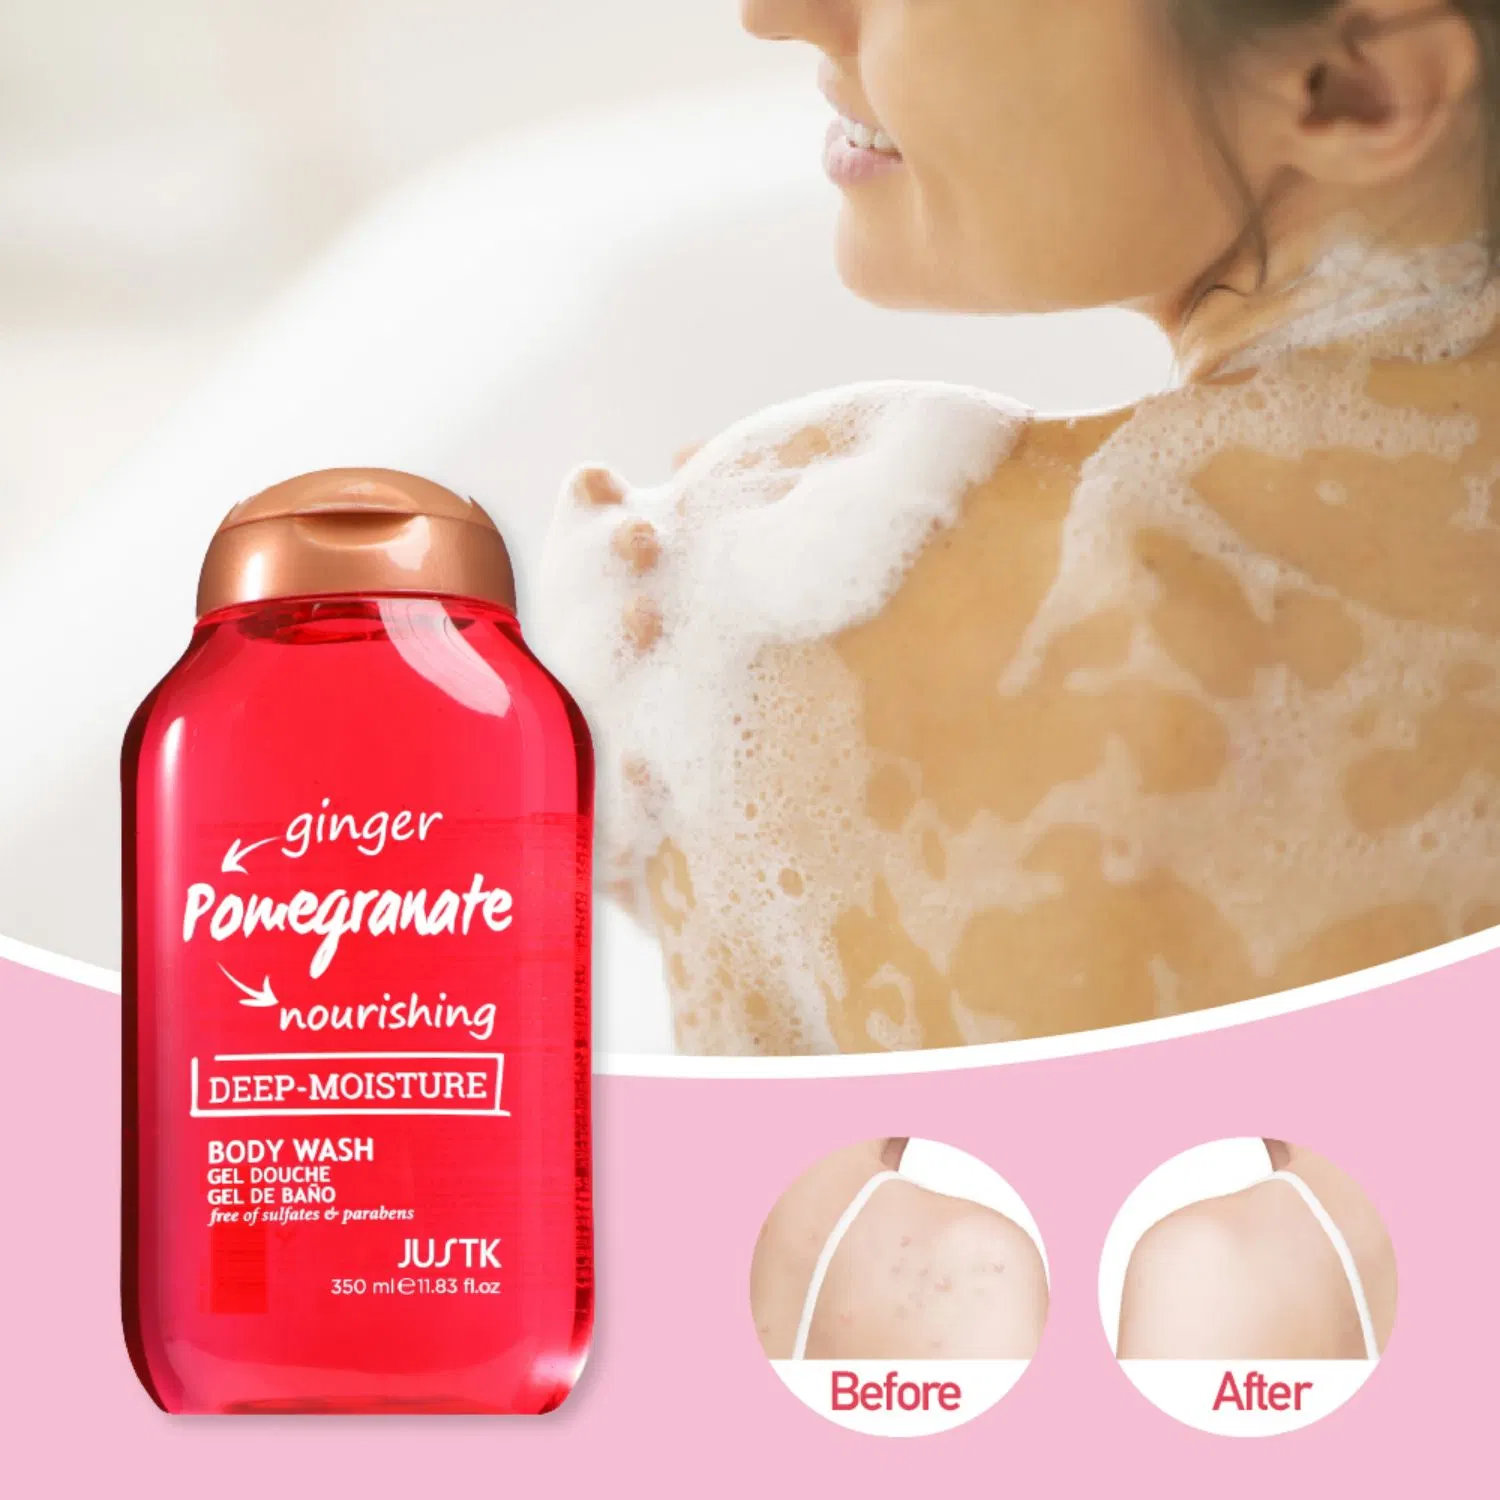 Justk Bath and Body Works Skin Care 350ml Ginger & Pomegranate Nourishing Body Wash Shower Gel